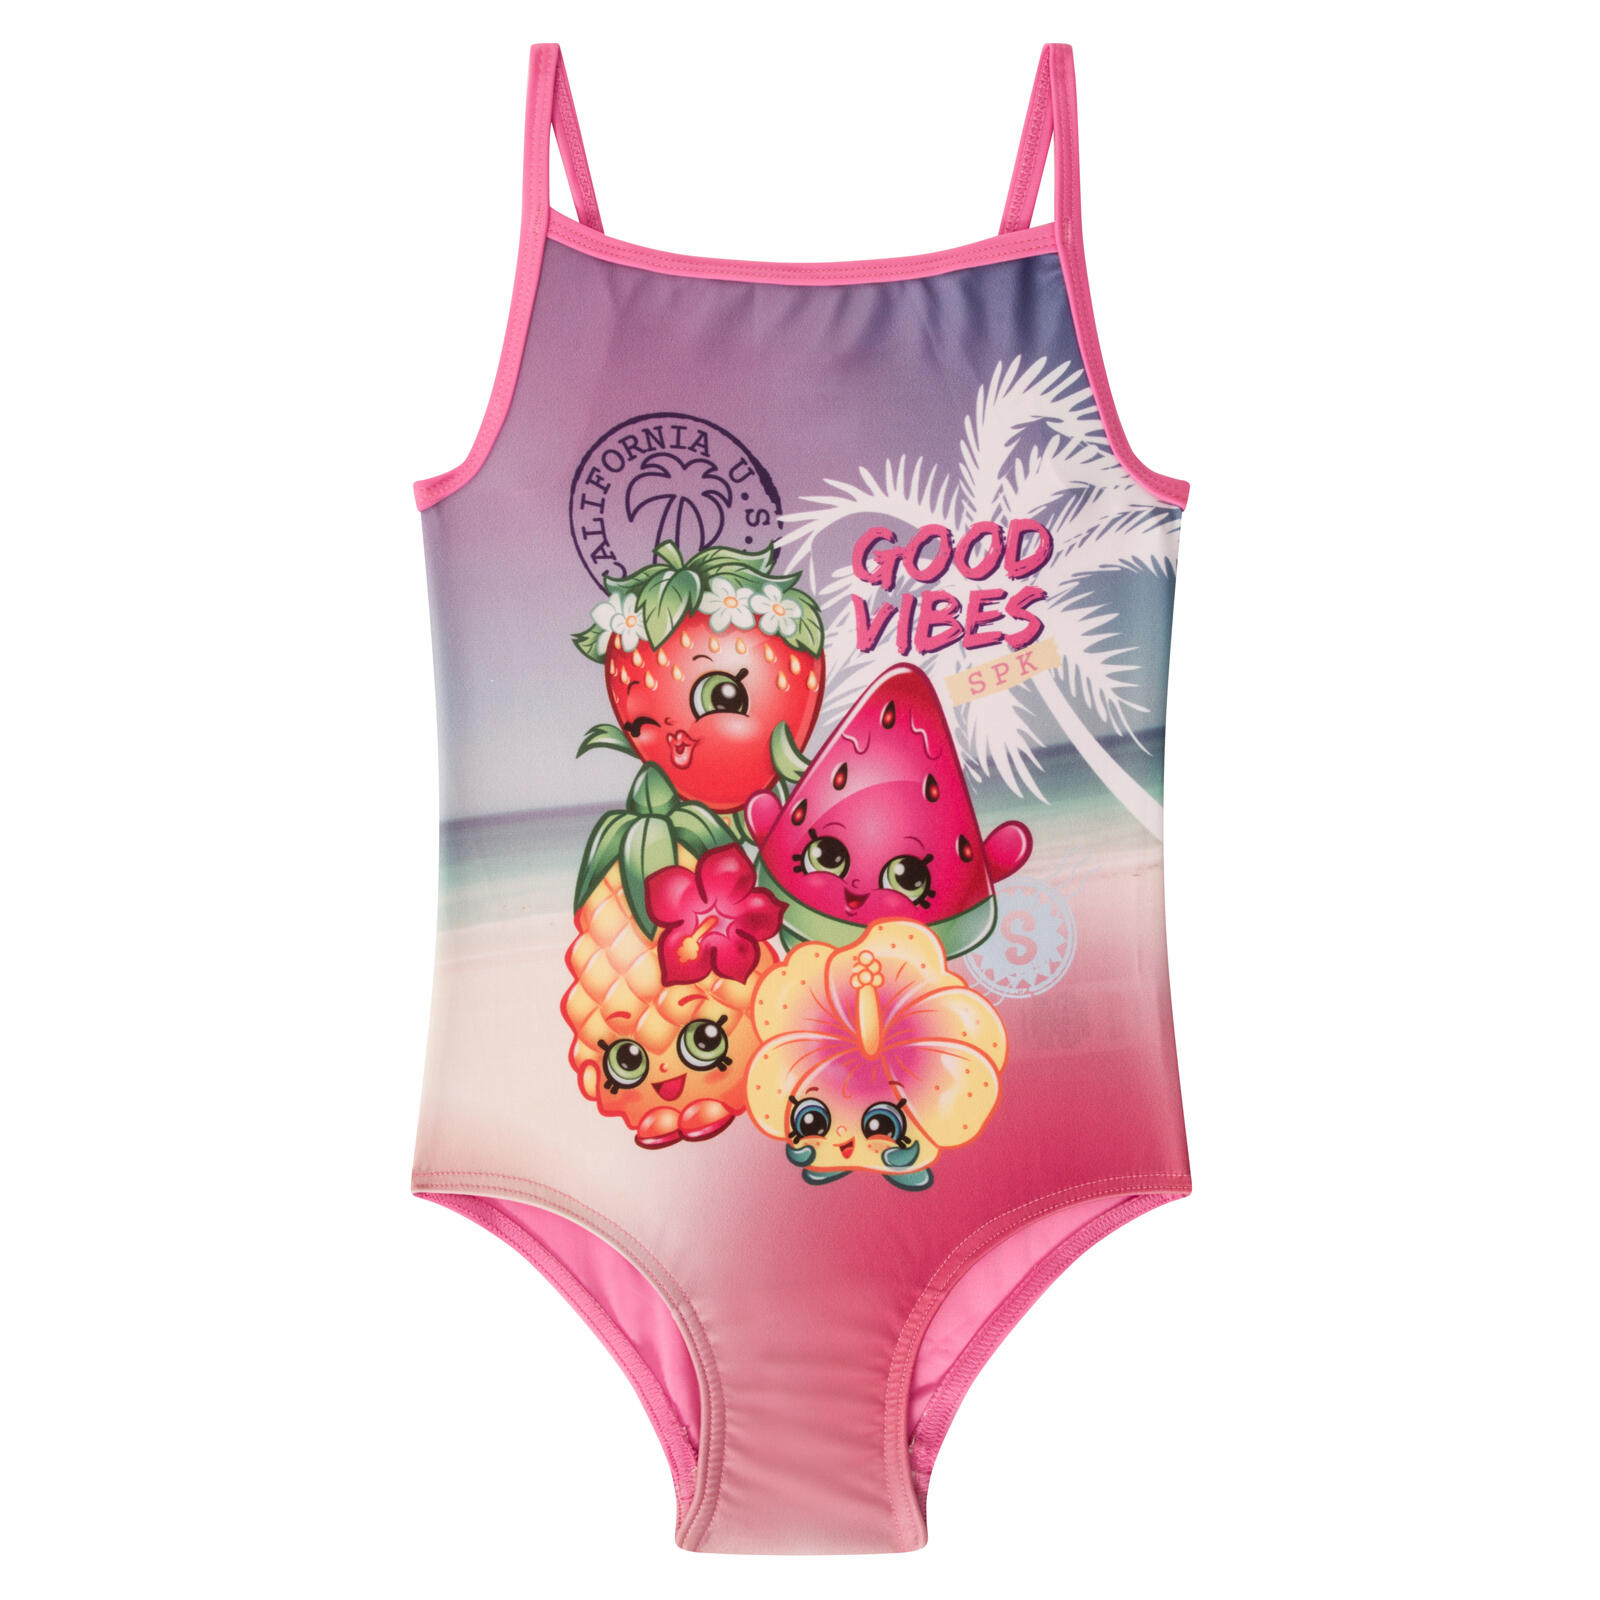 FAN ORIGINALS Shopkins Girls Swim Suit Costume Kids OFFICIAL Gift